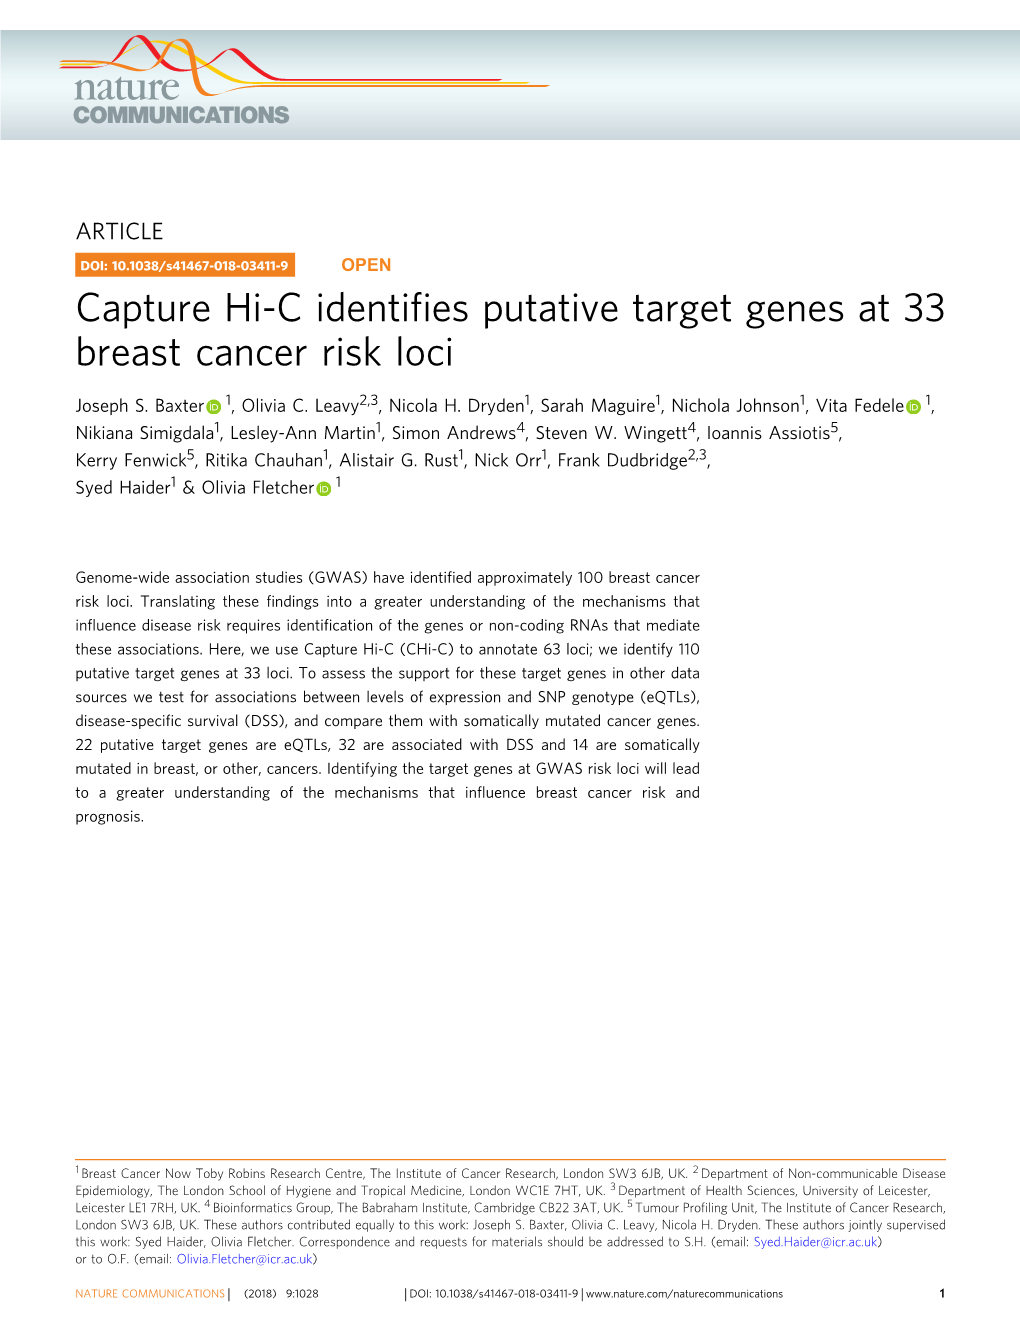 Capture Hi-C Identifies Putative Target Genes at 33 Breast Cancer Risk Loci